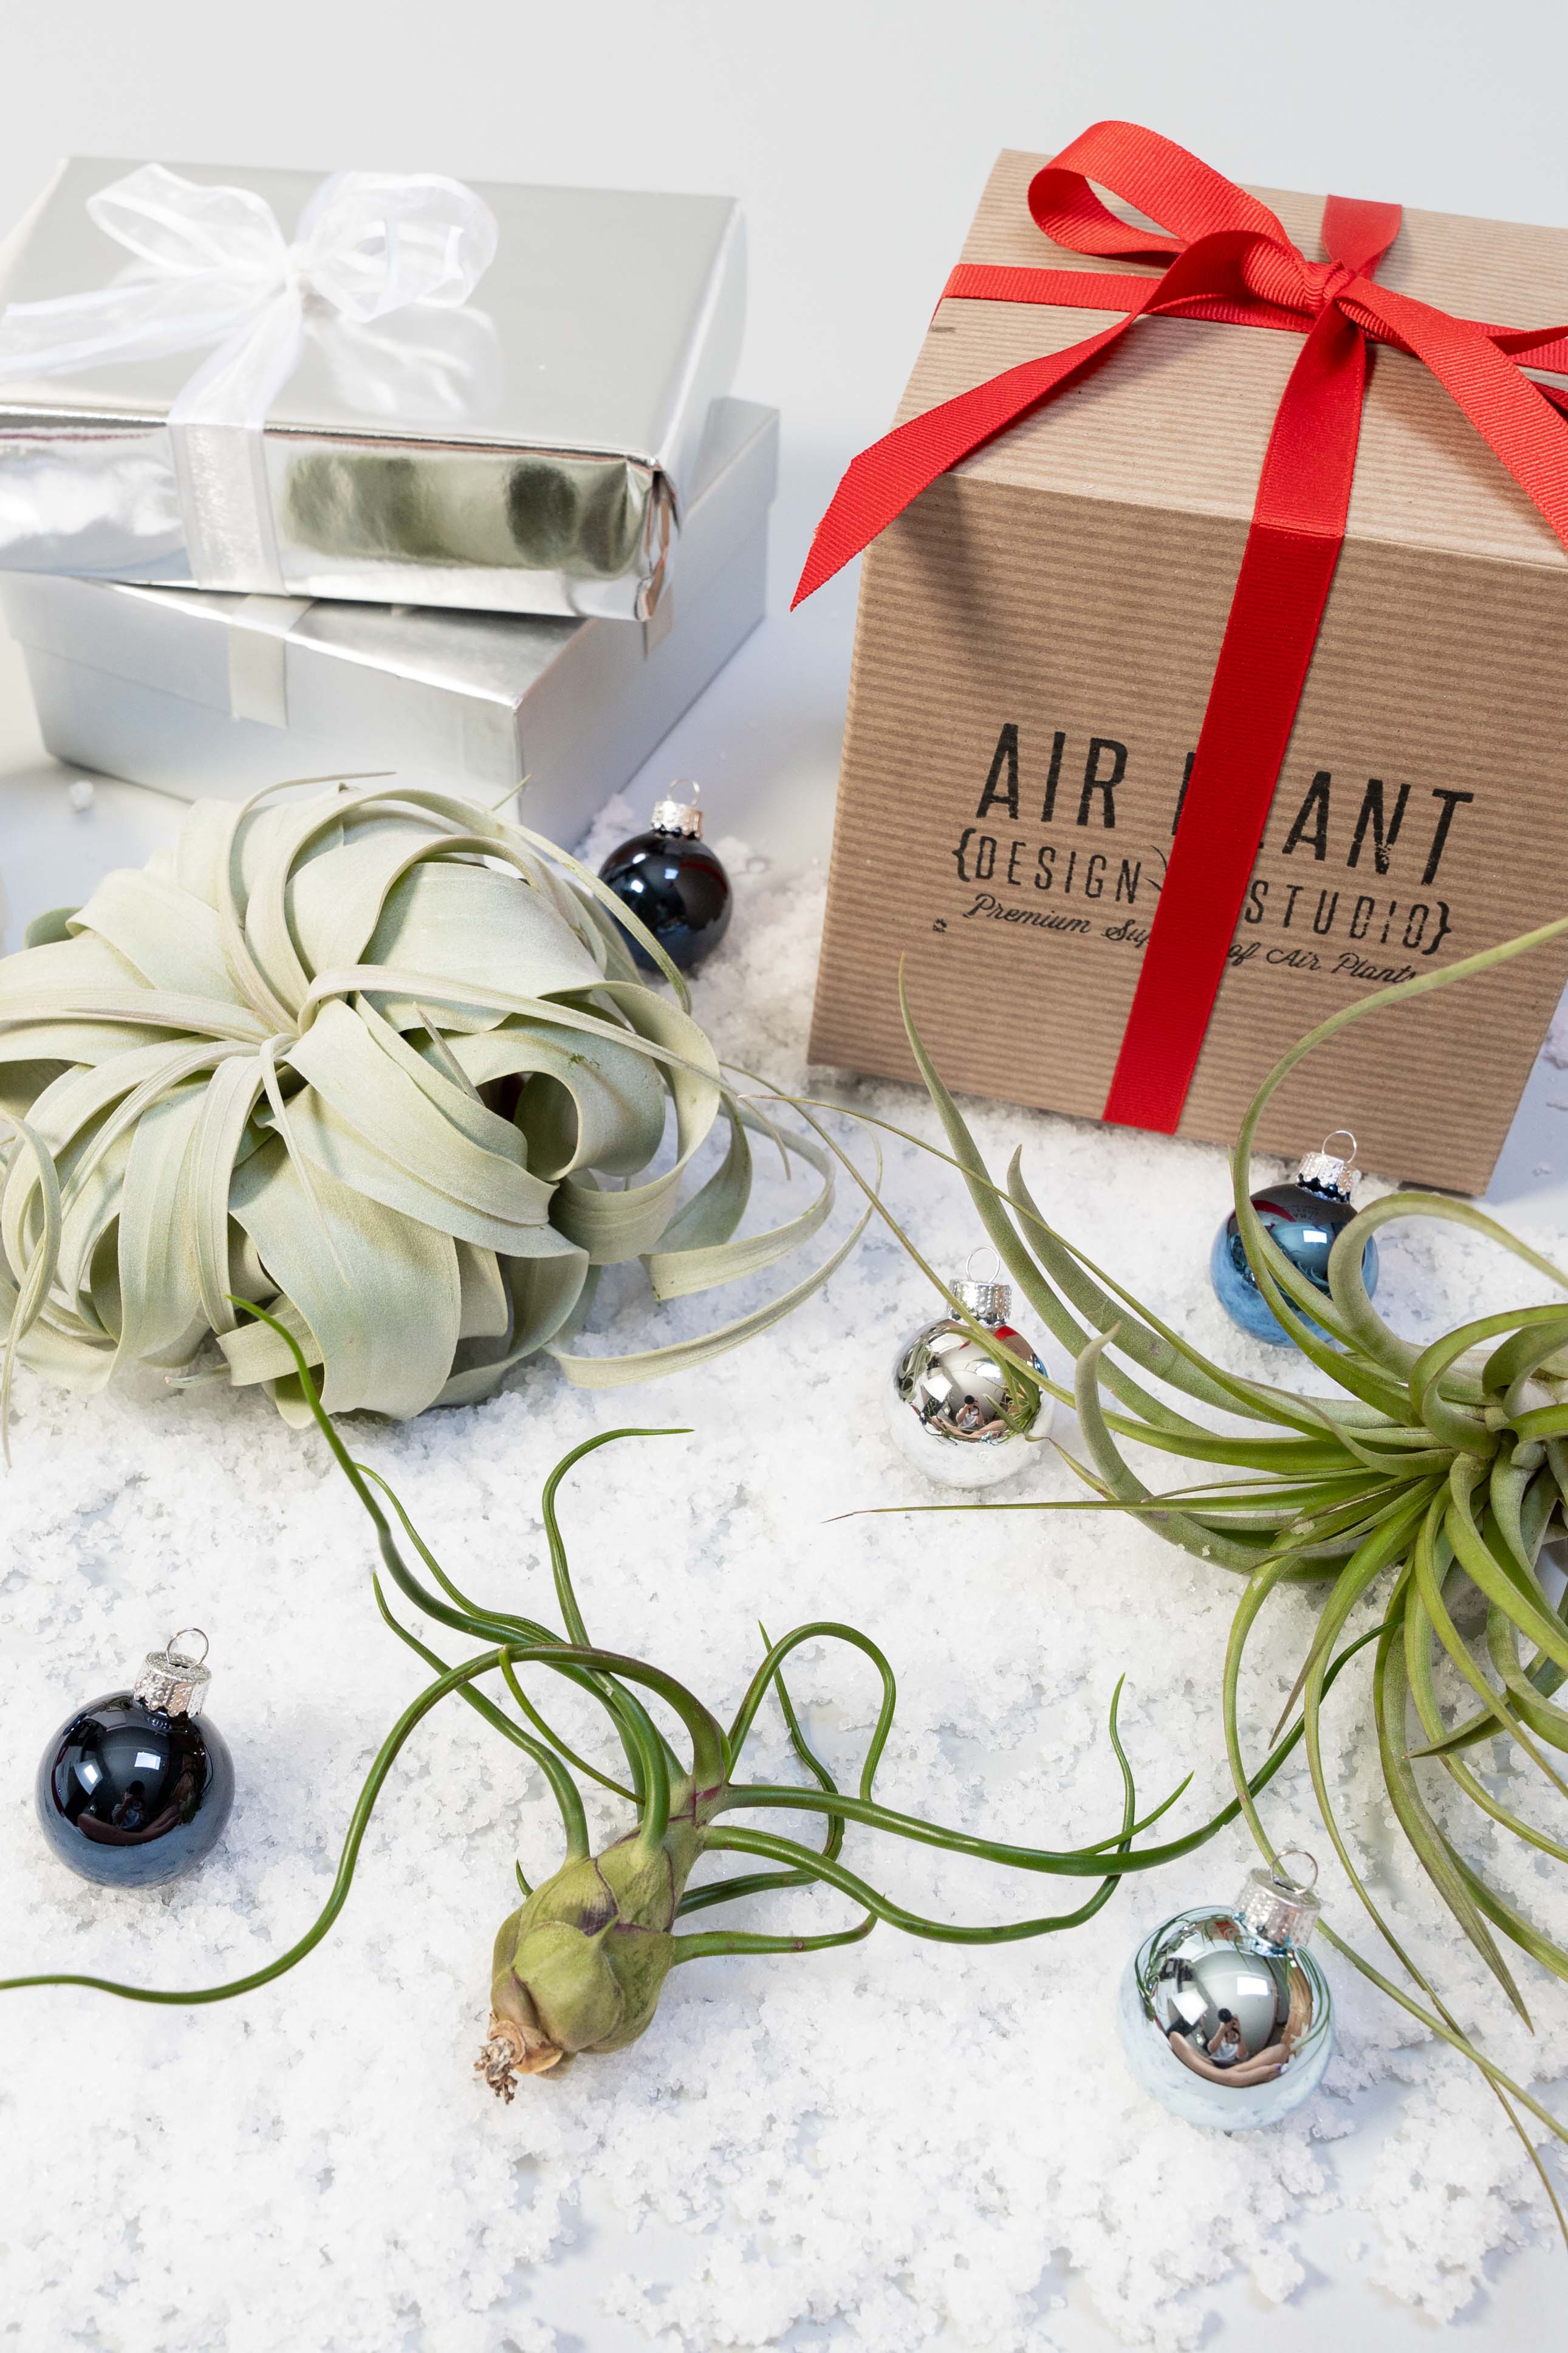 air plant tillandsia holiday gift present